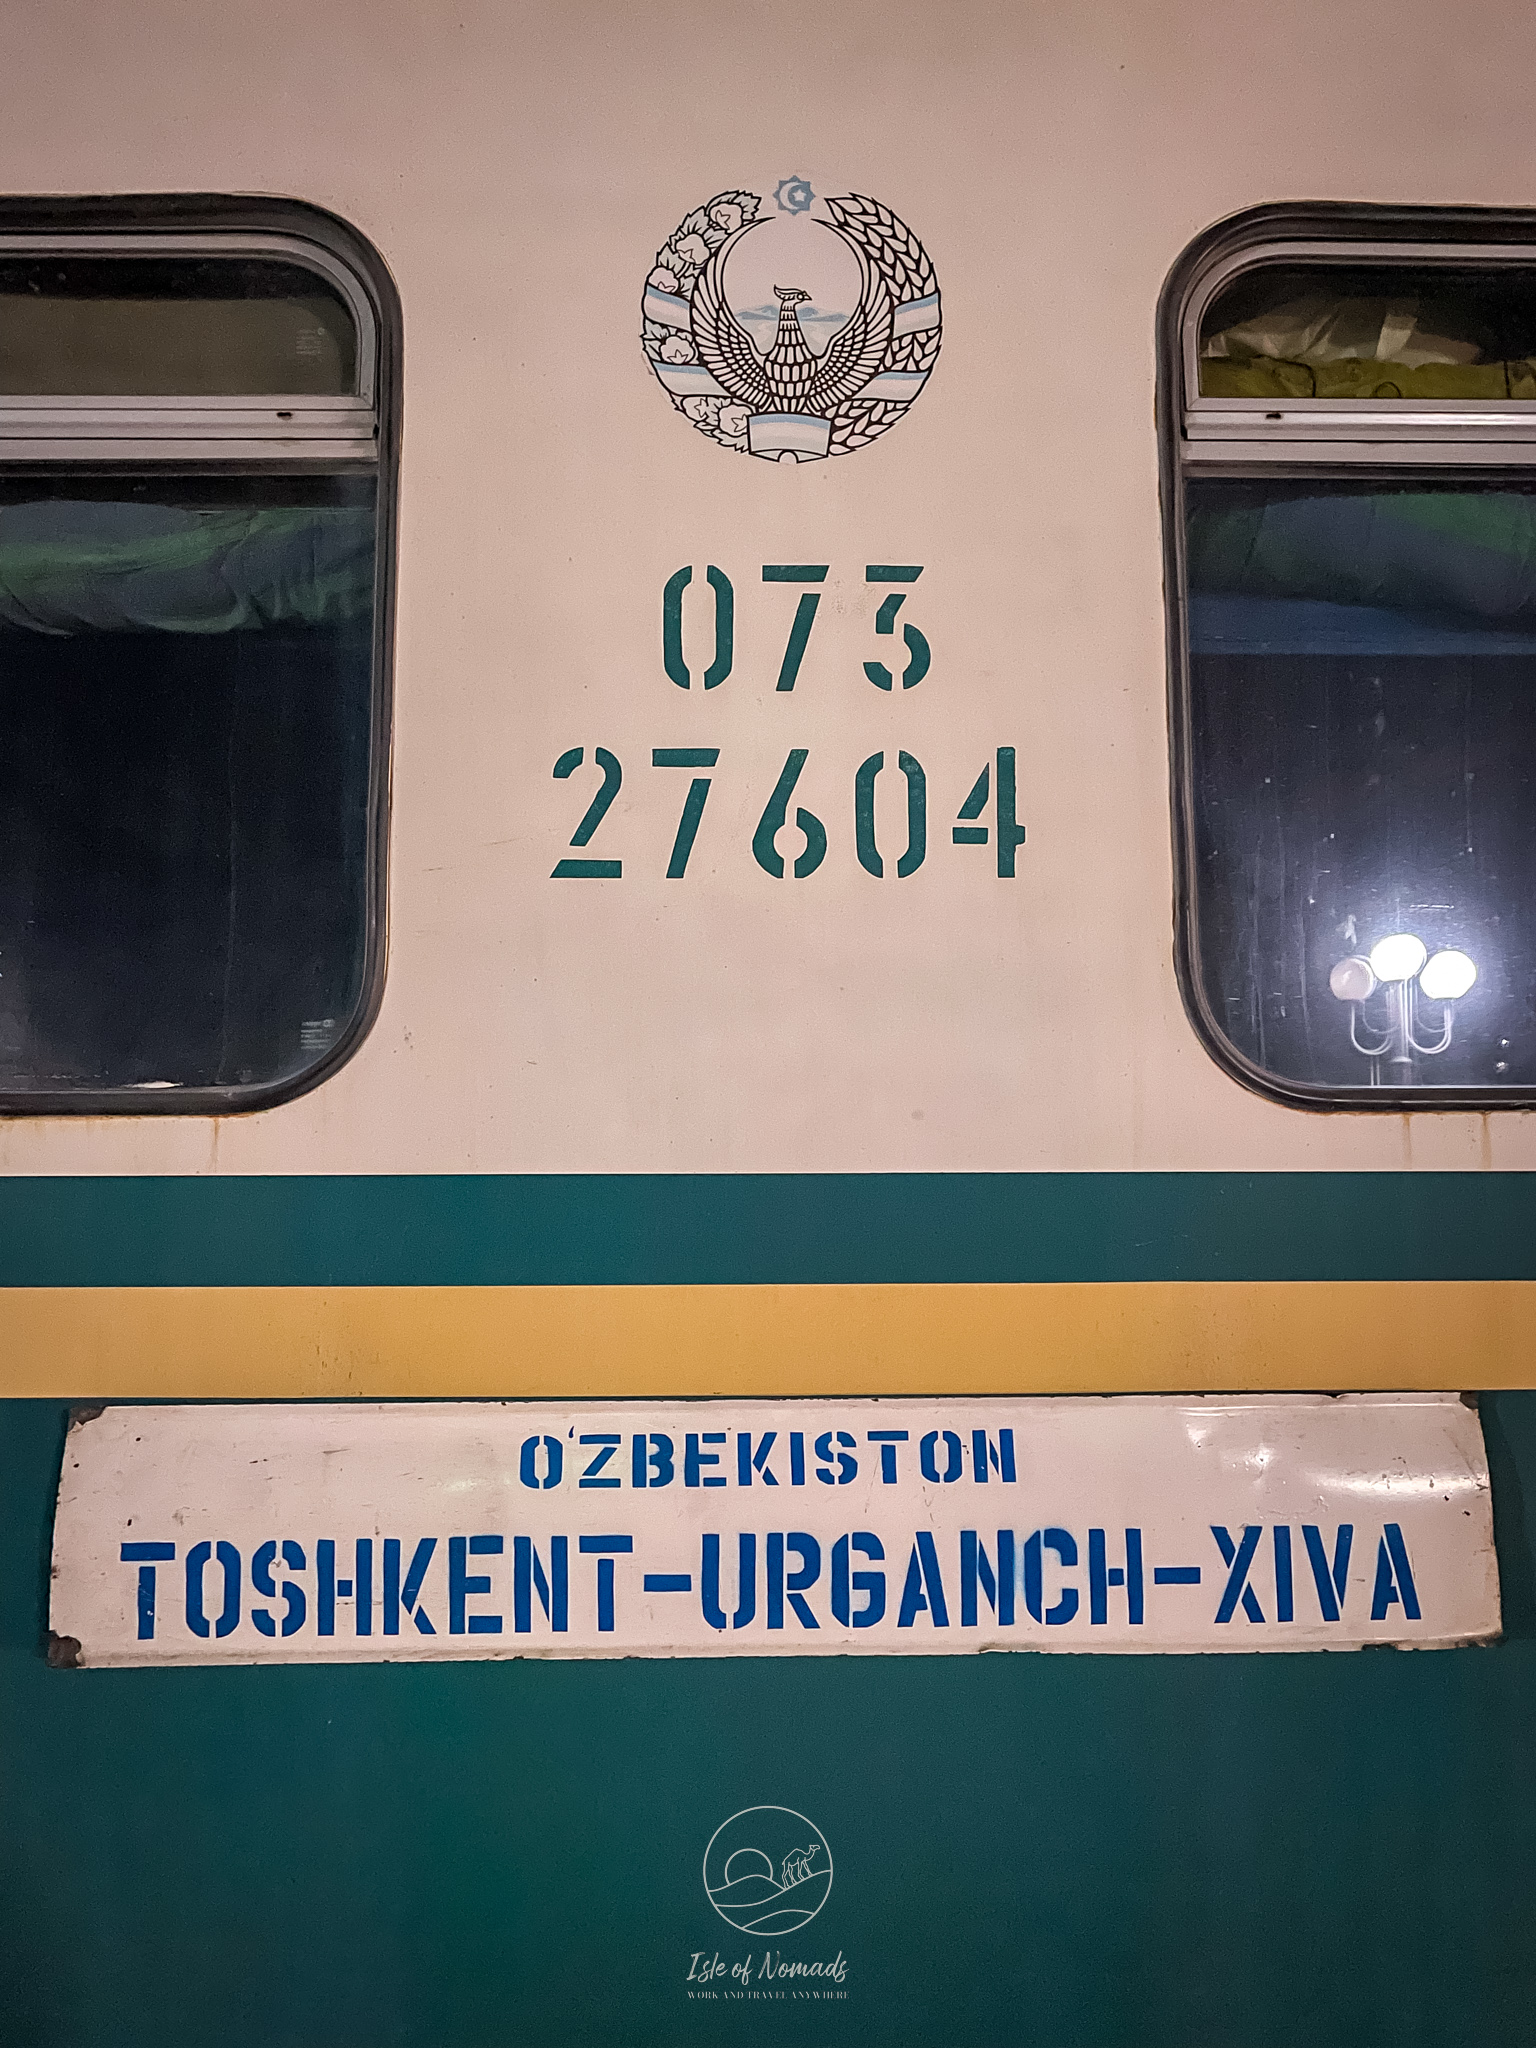 Night trains in Uzbekistan...